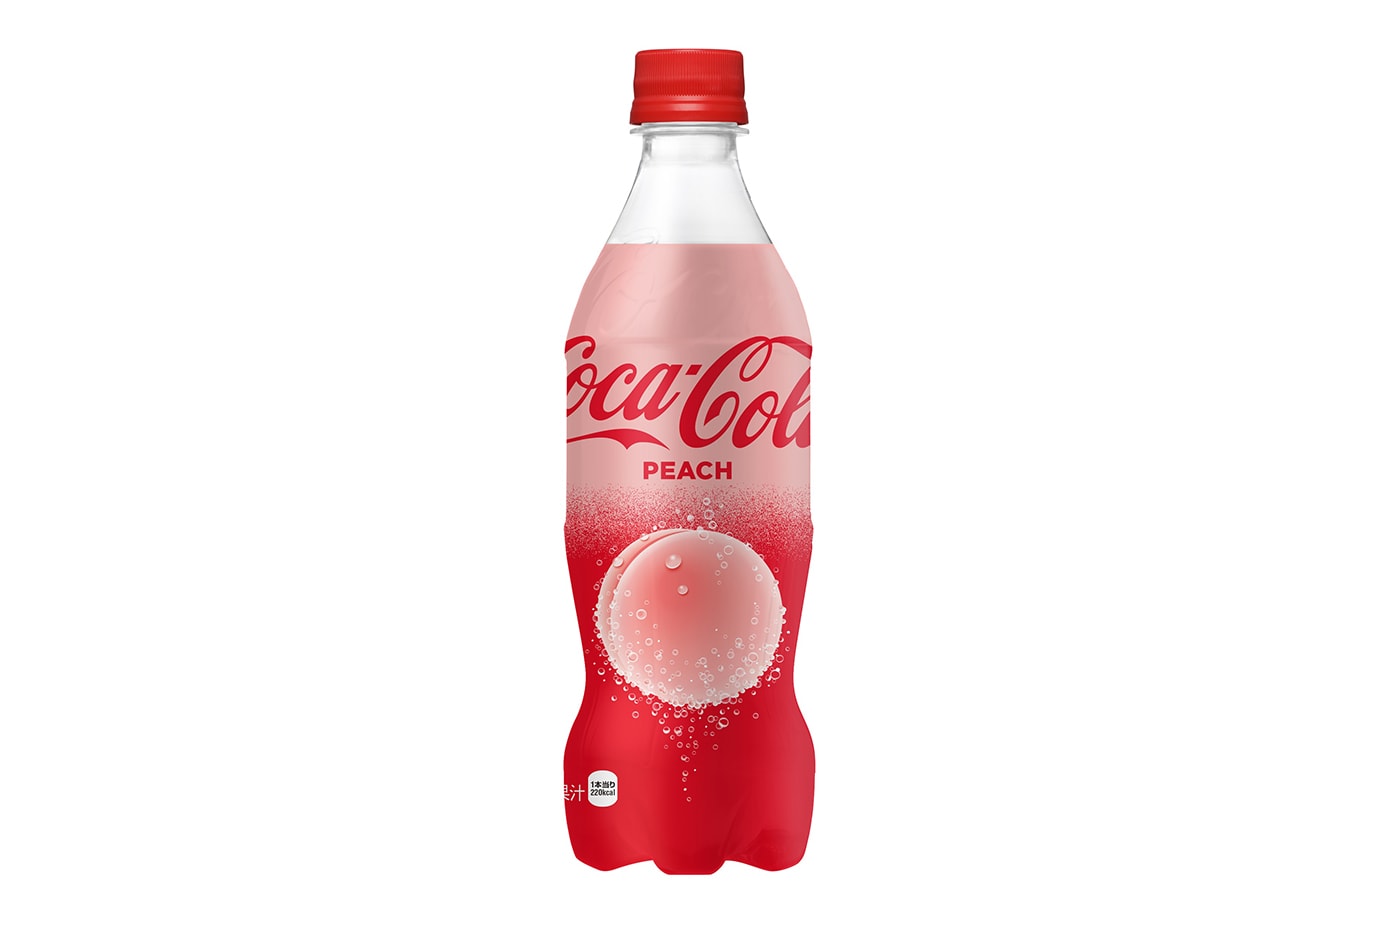 Peach Coca-Cola Japan Release